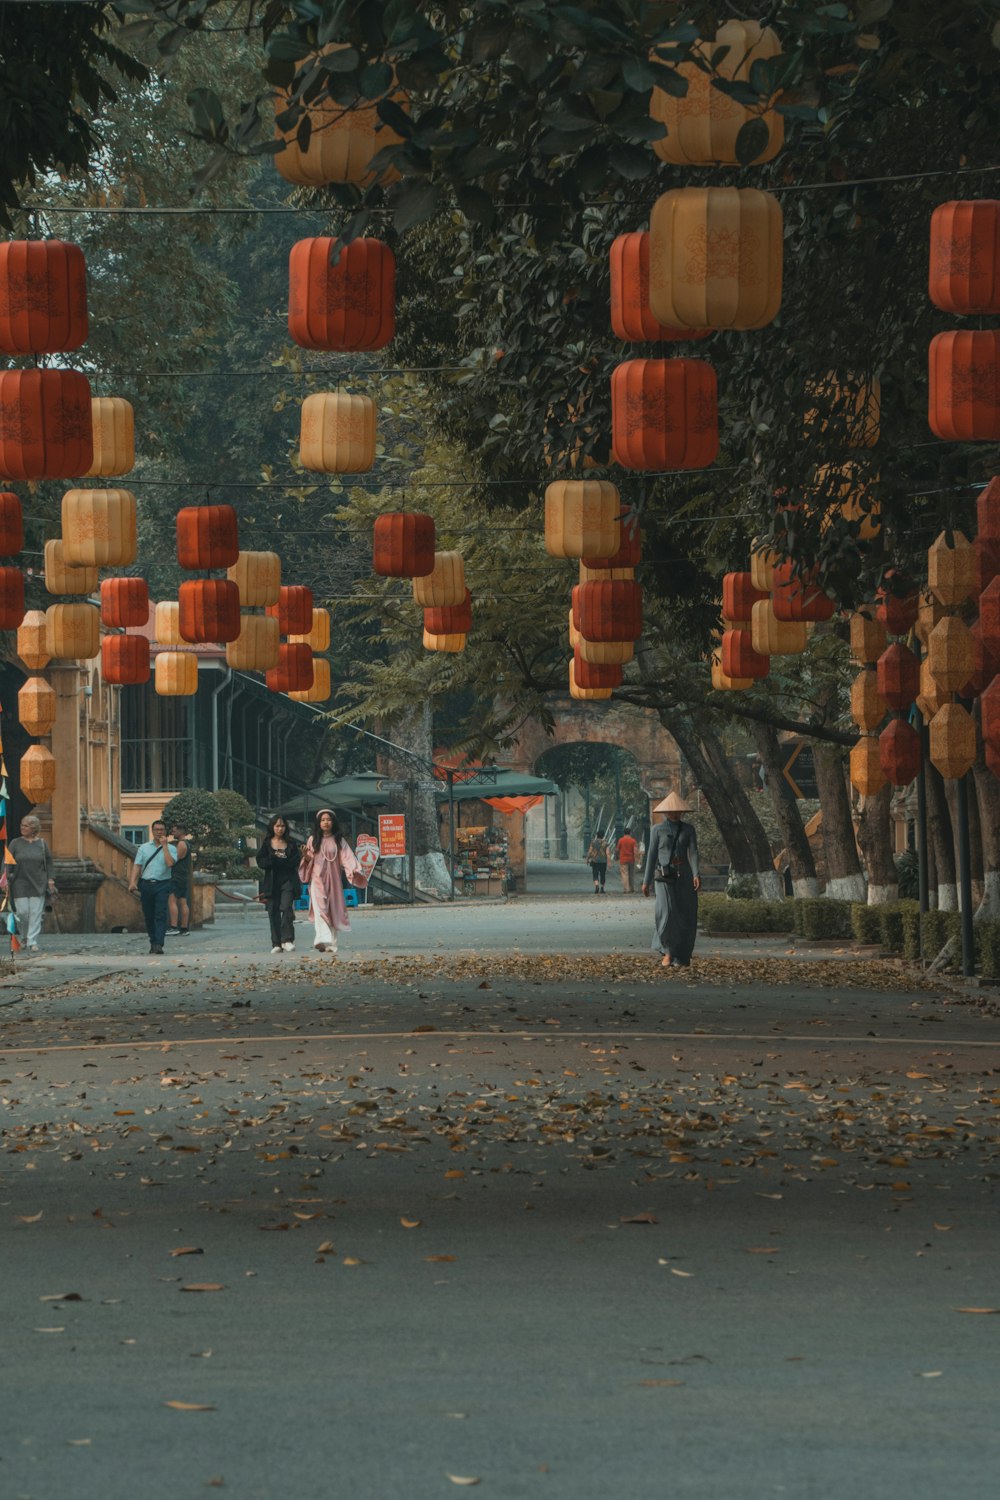 a group of people walking down a street under orange lanterns